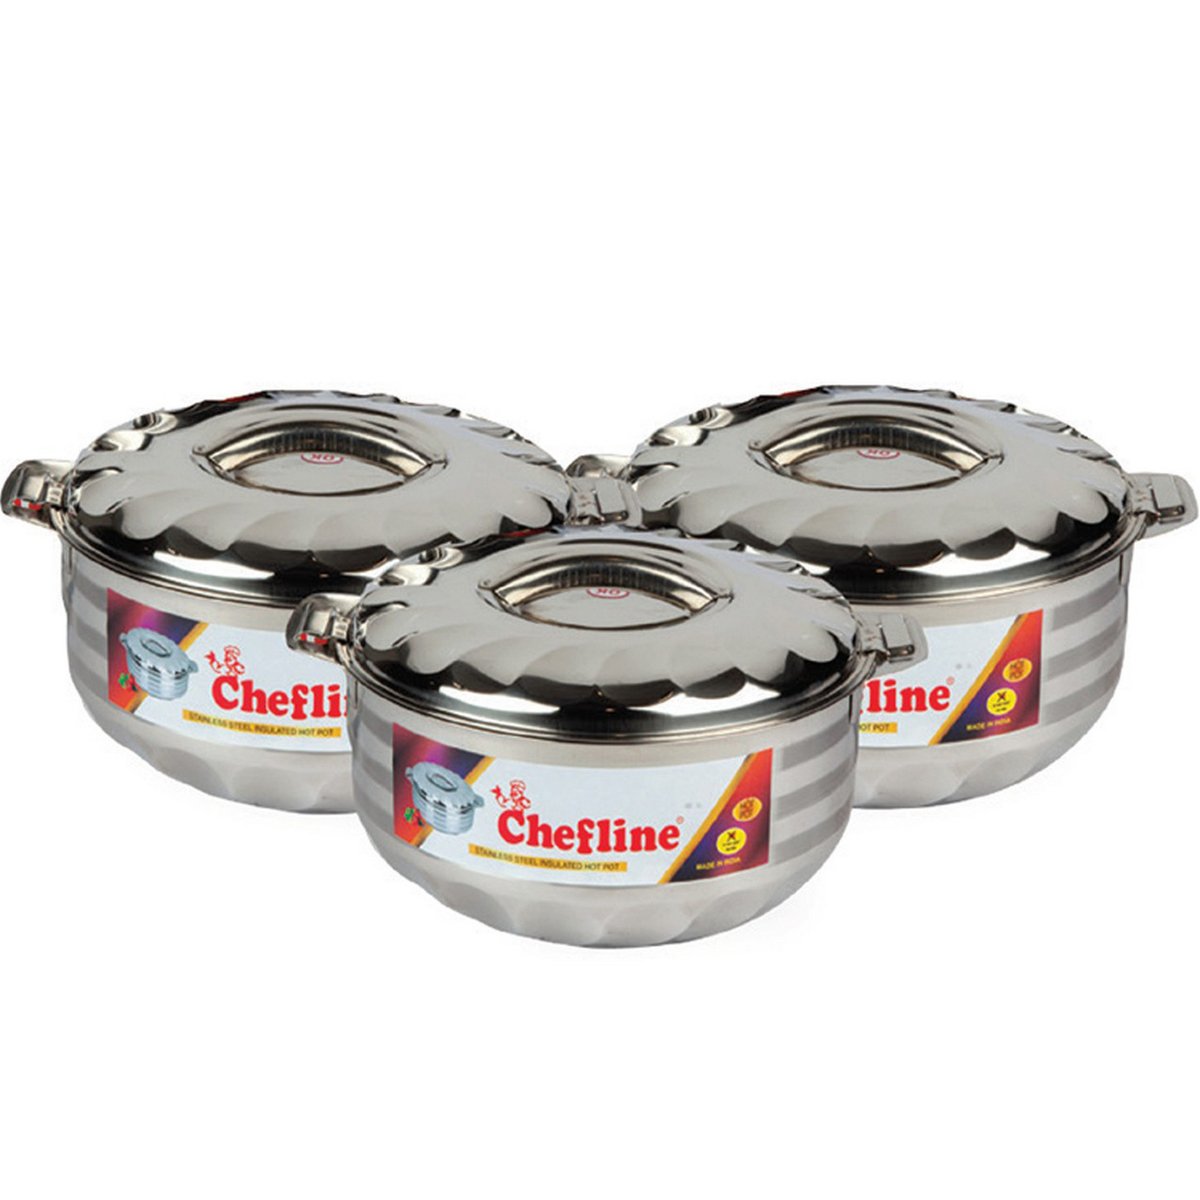 Chefline Stainless Steel Hot Pot Set WAVES 3pcs 1.5L+2.5L+3.5L